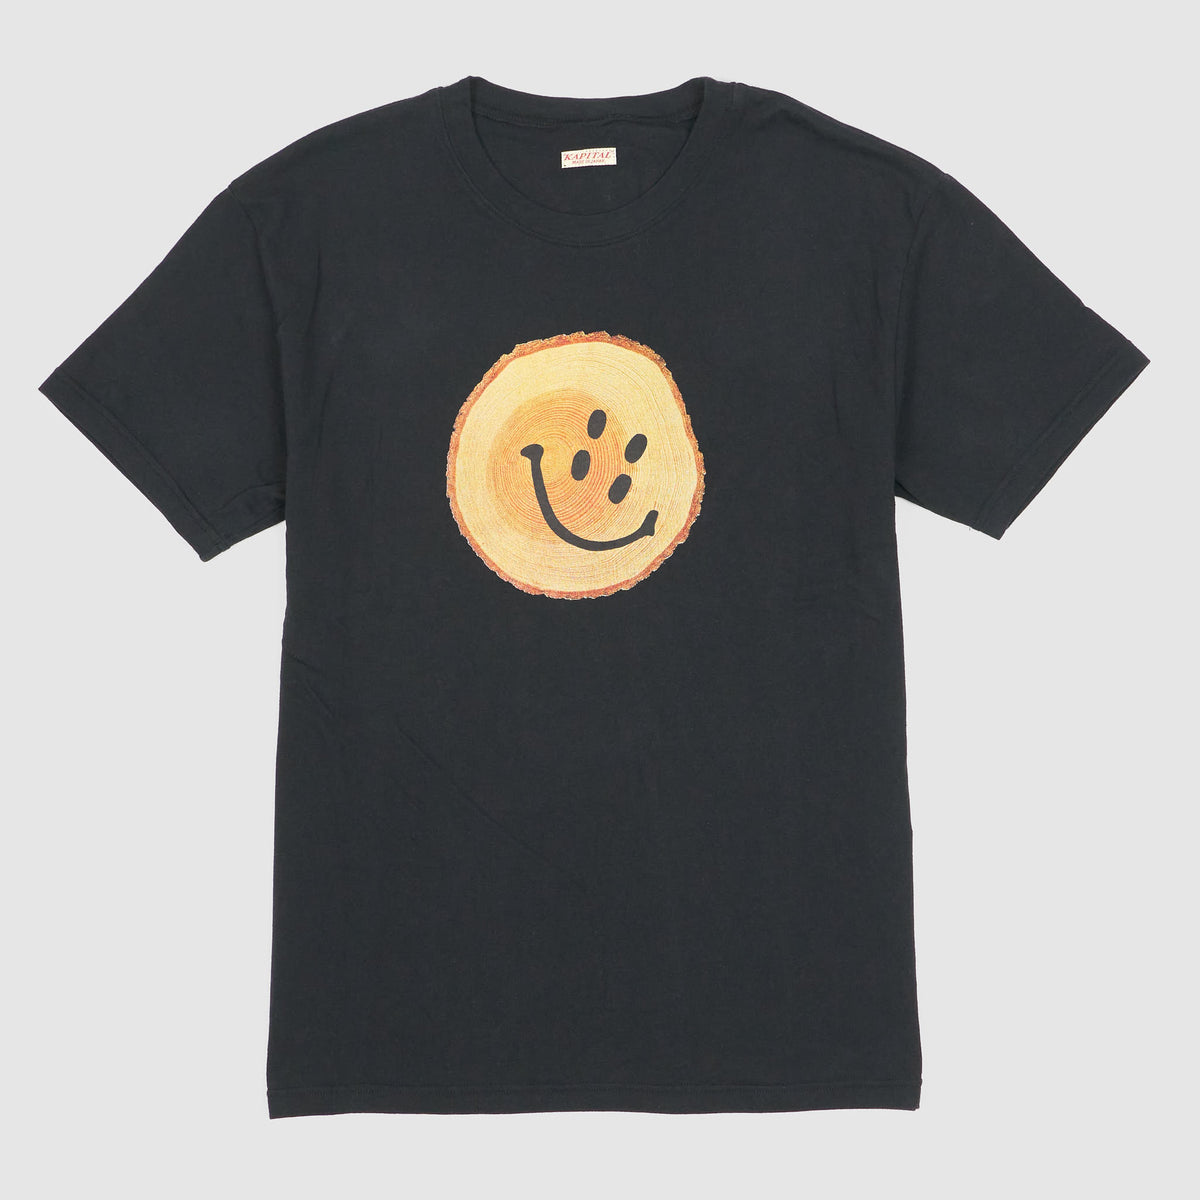 Kapital Smiley-Wood Crew Neck Printed Basic T-Shirt